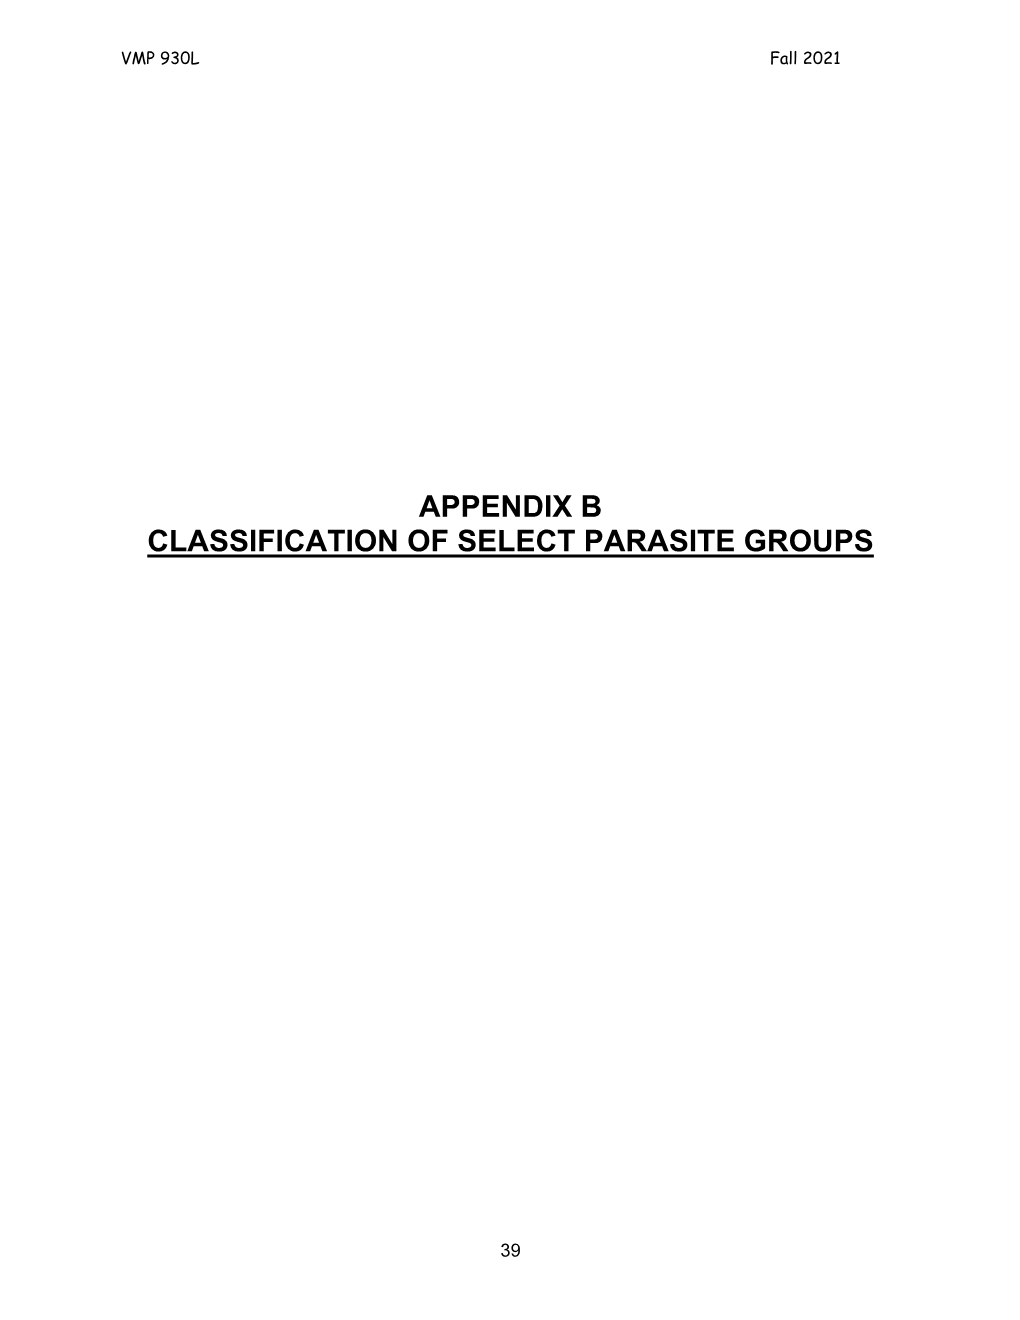 Appendix B Classification of Select Parasite Groups